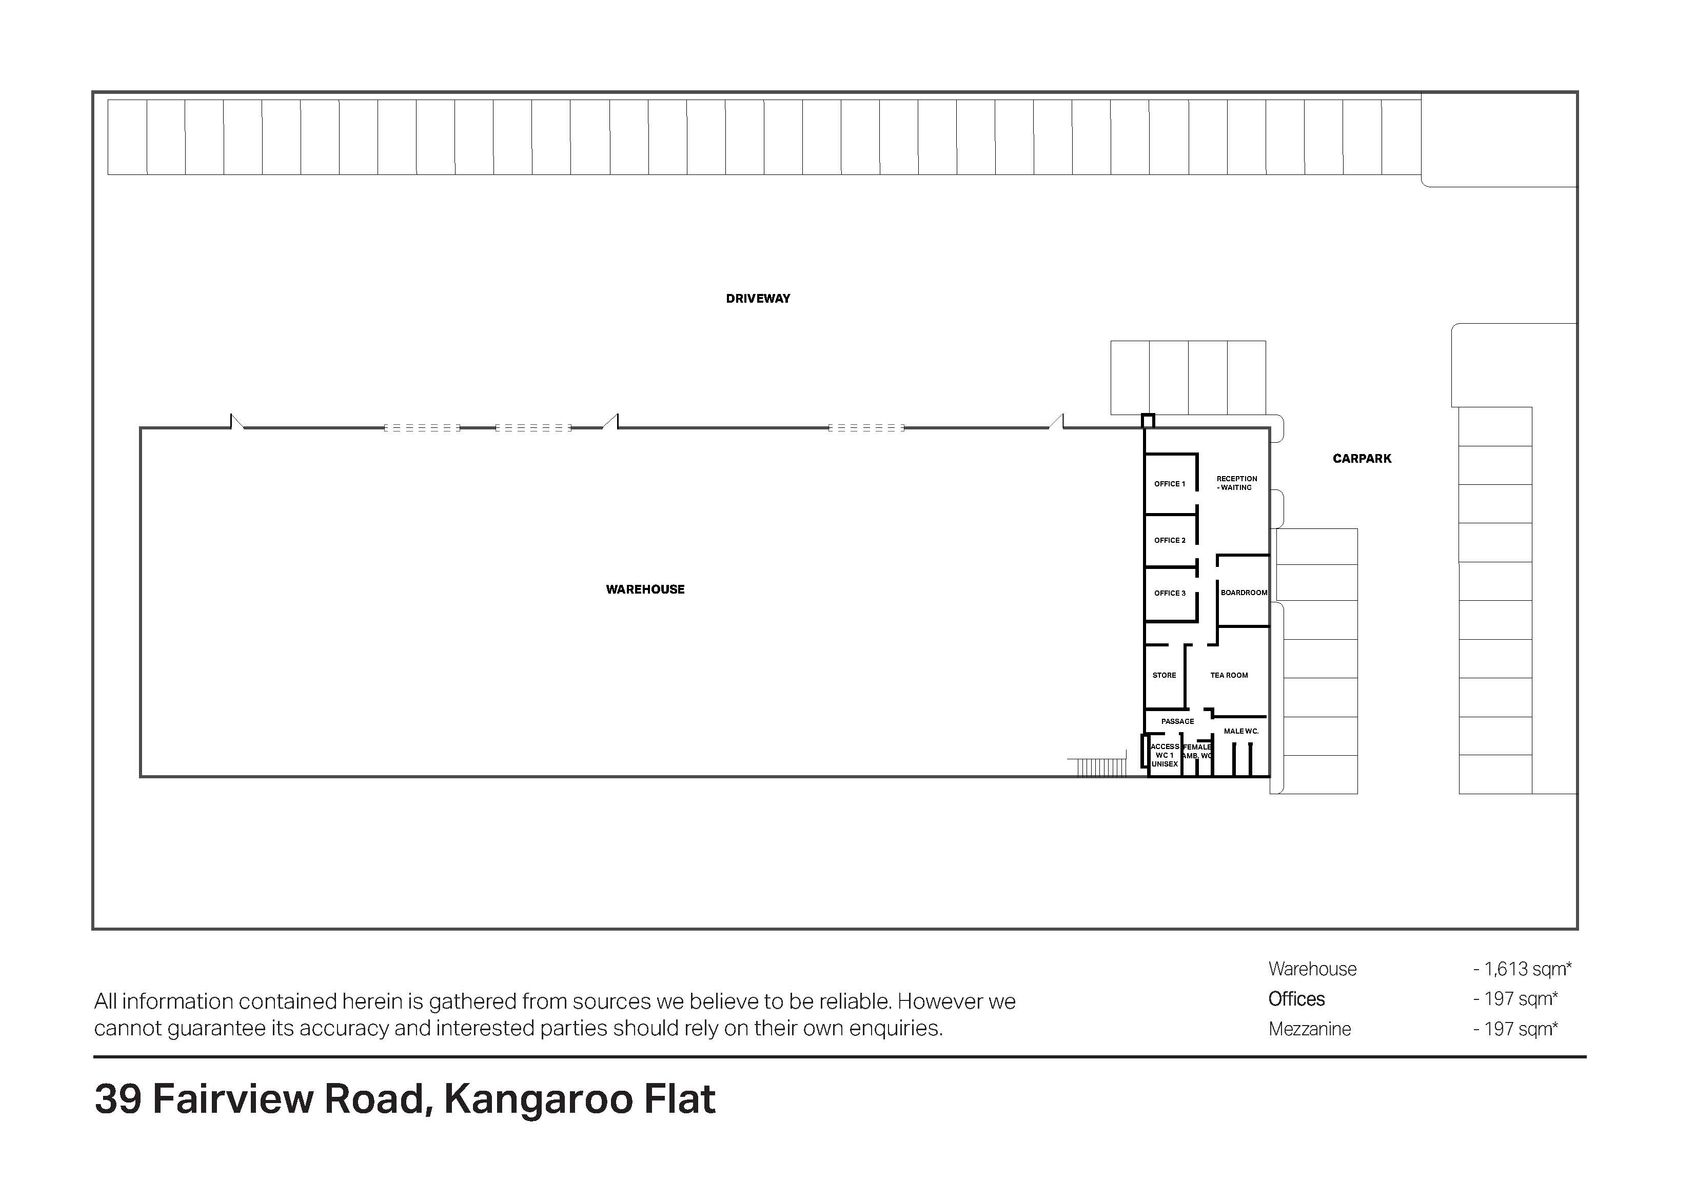 39 Fairview Road, Kangaroo Flat   Floor plan